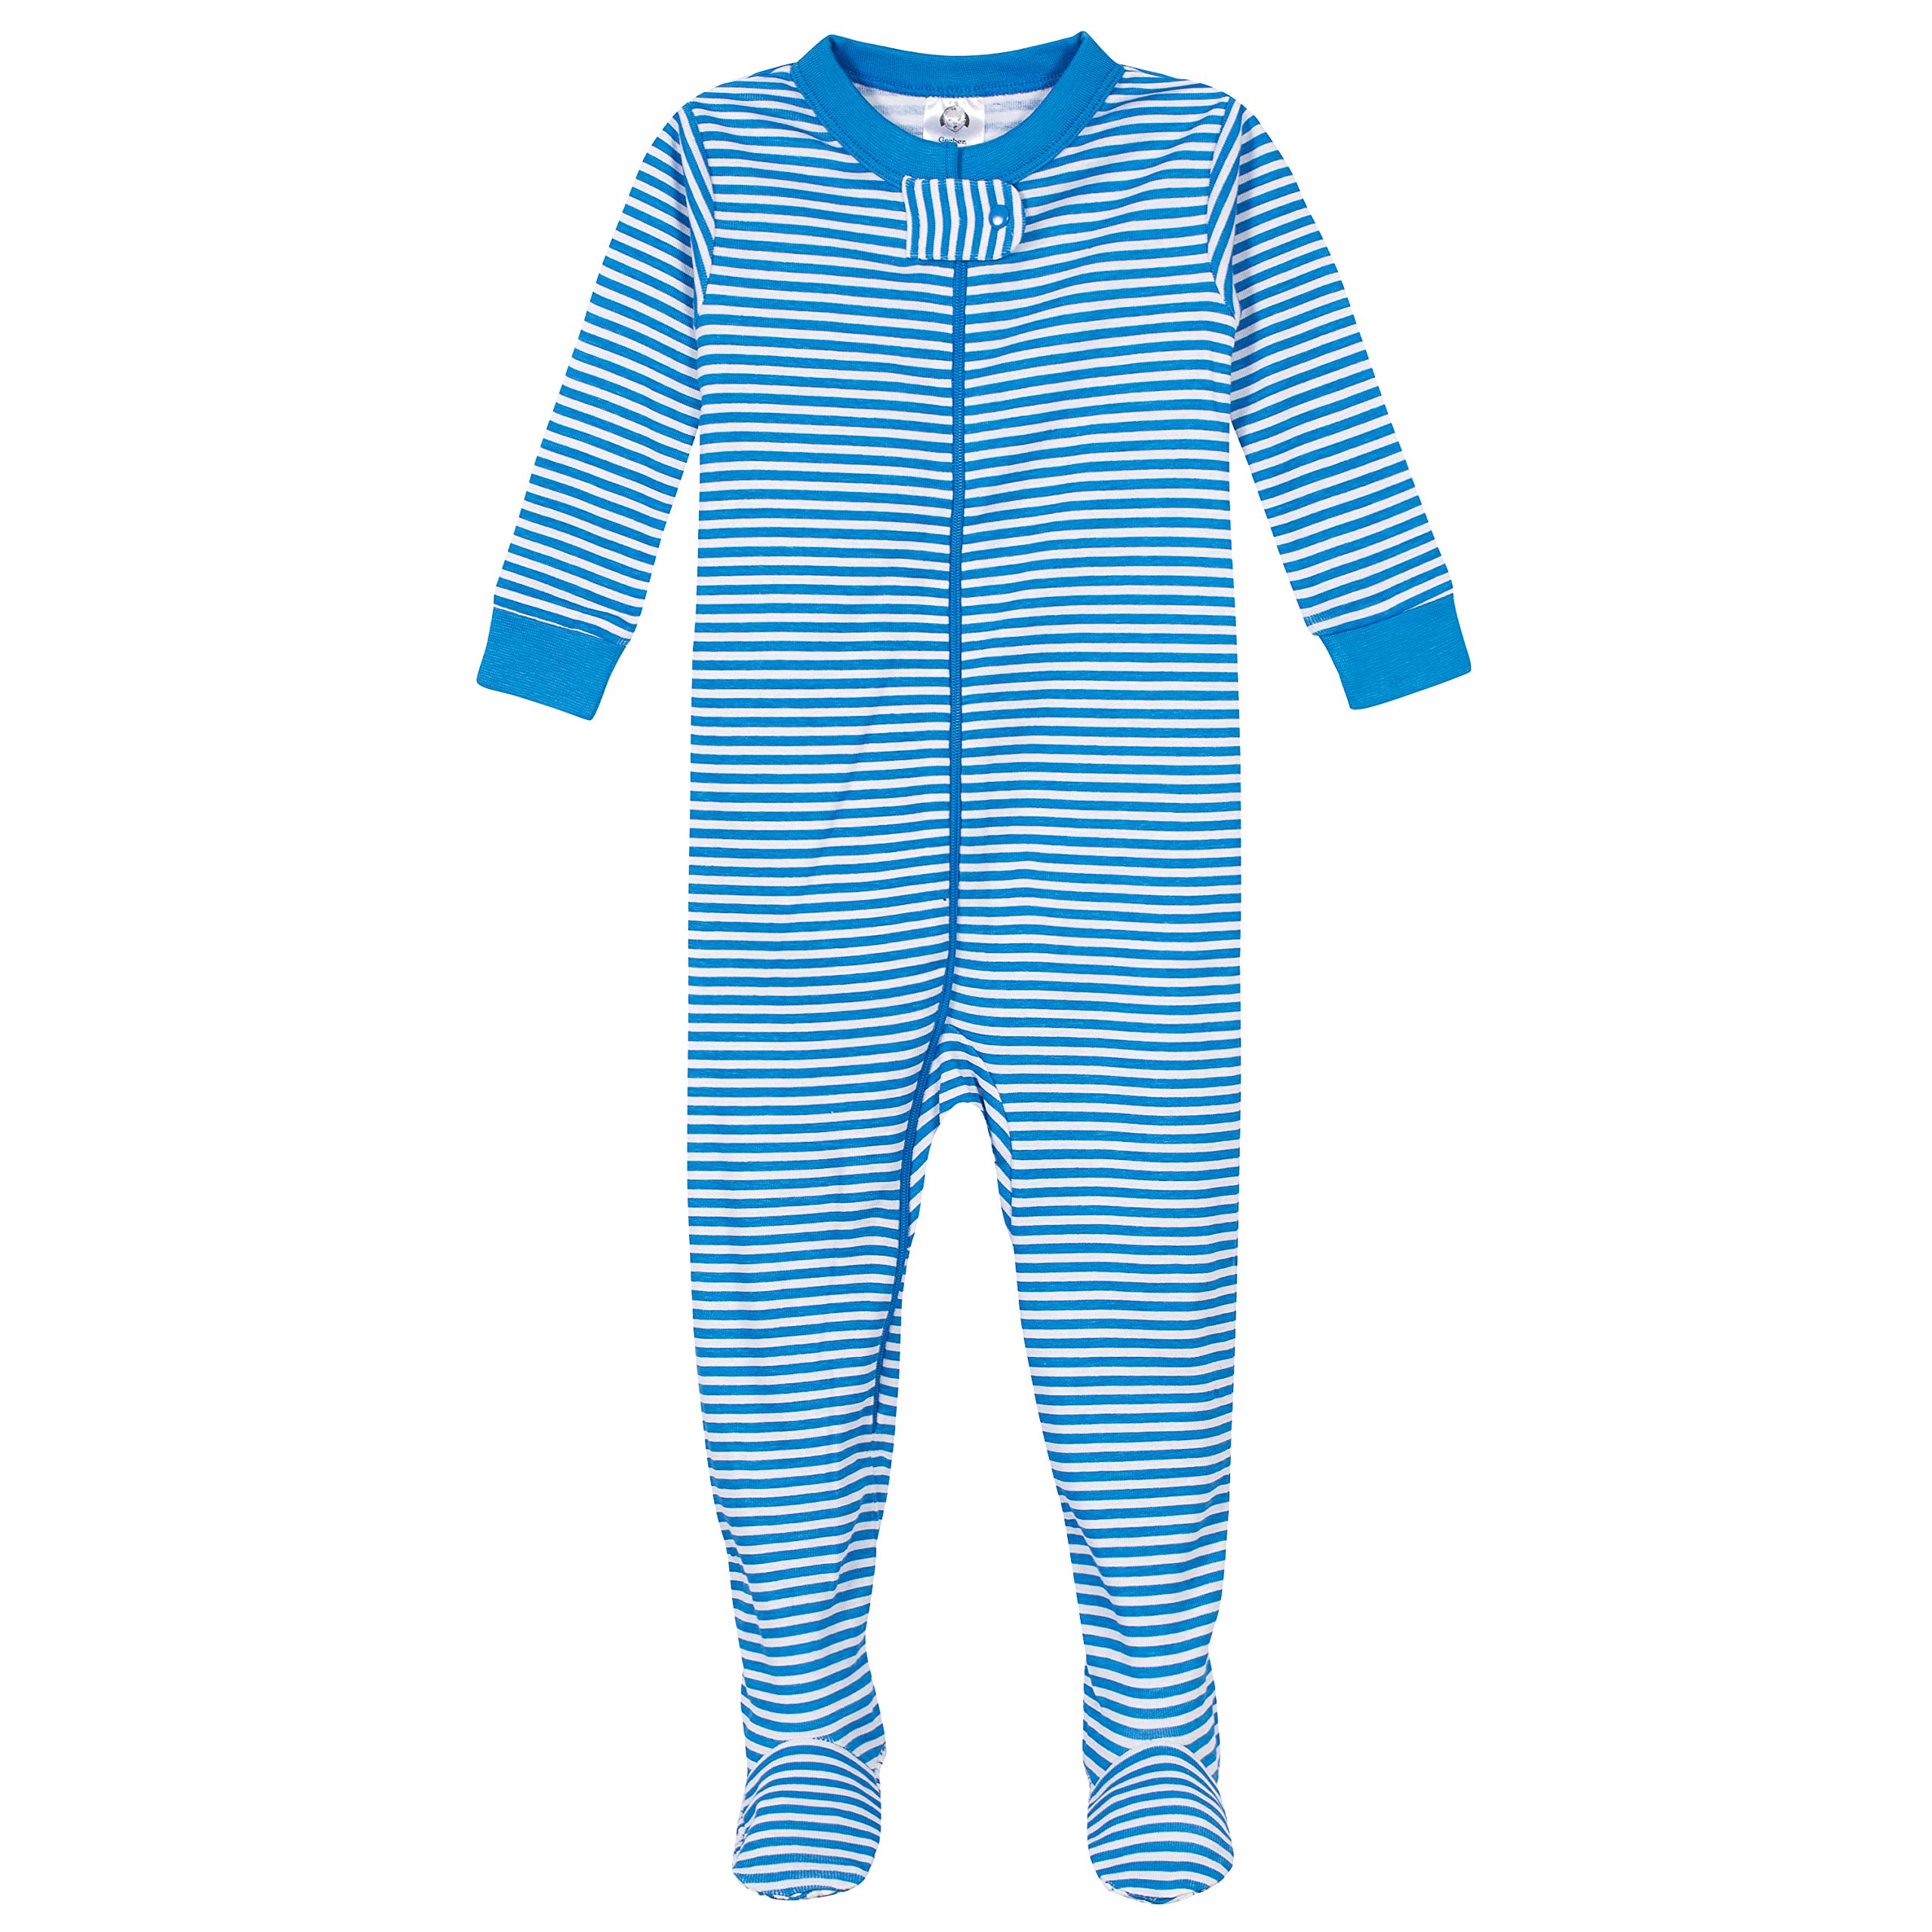 Gerber Baby Boys' 4-Pack Footed Pajamas